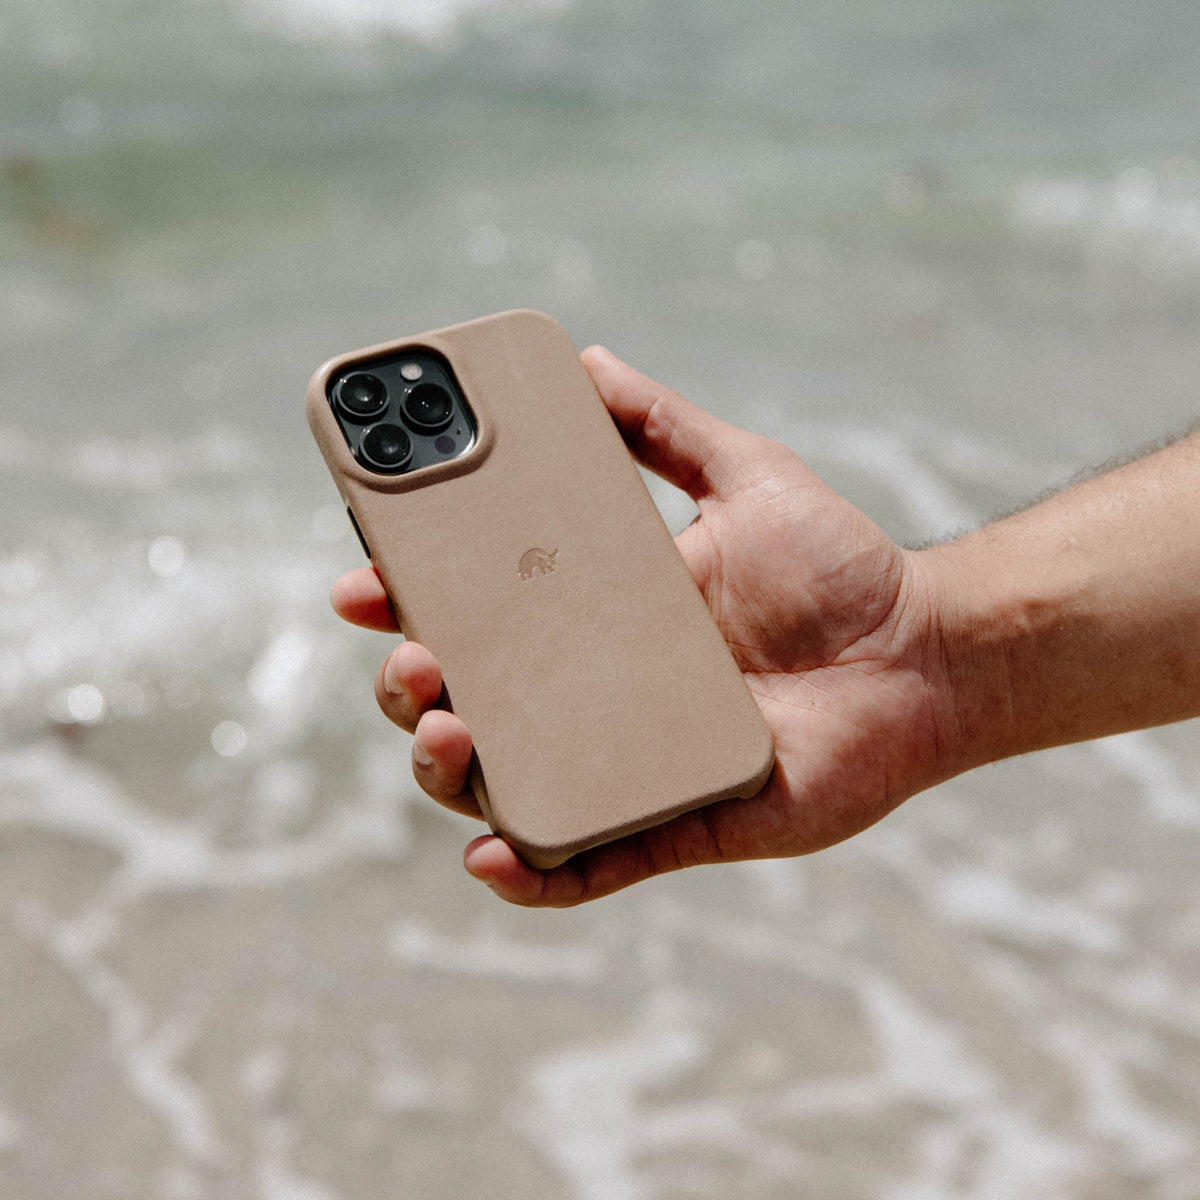 Bullstrap MagSafe iPhone Cases - Ocean 13 Pro